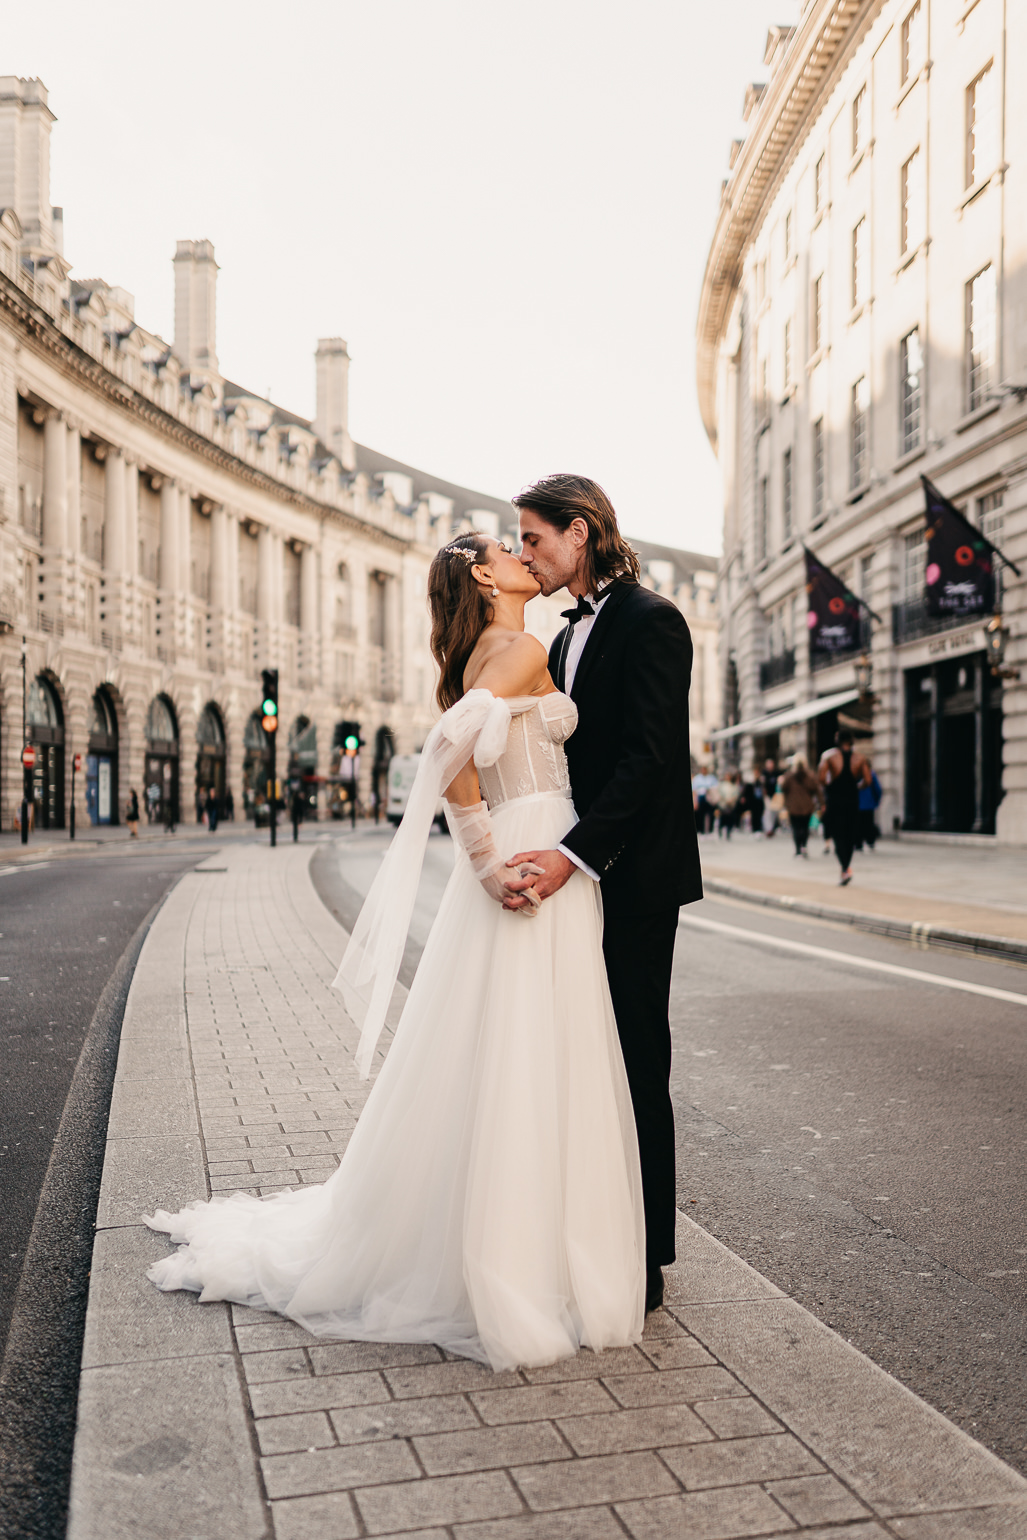 Regent street wedding photos, London elopement, London wedding photographer, Monreal Bridal 'Tina' Wedding Dress, black tie london wedding